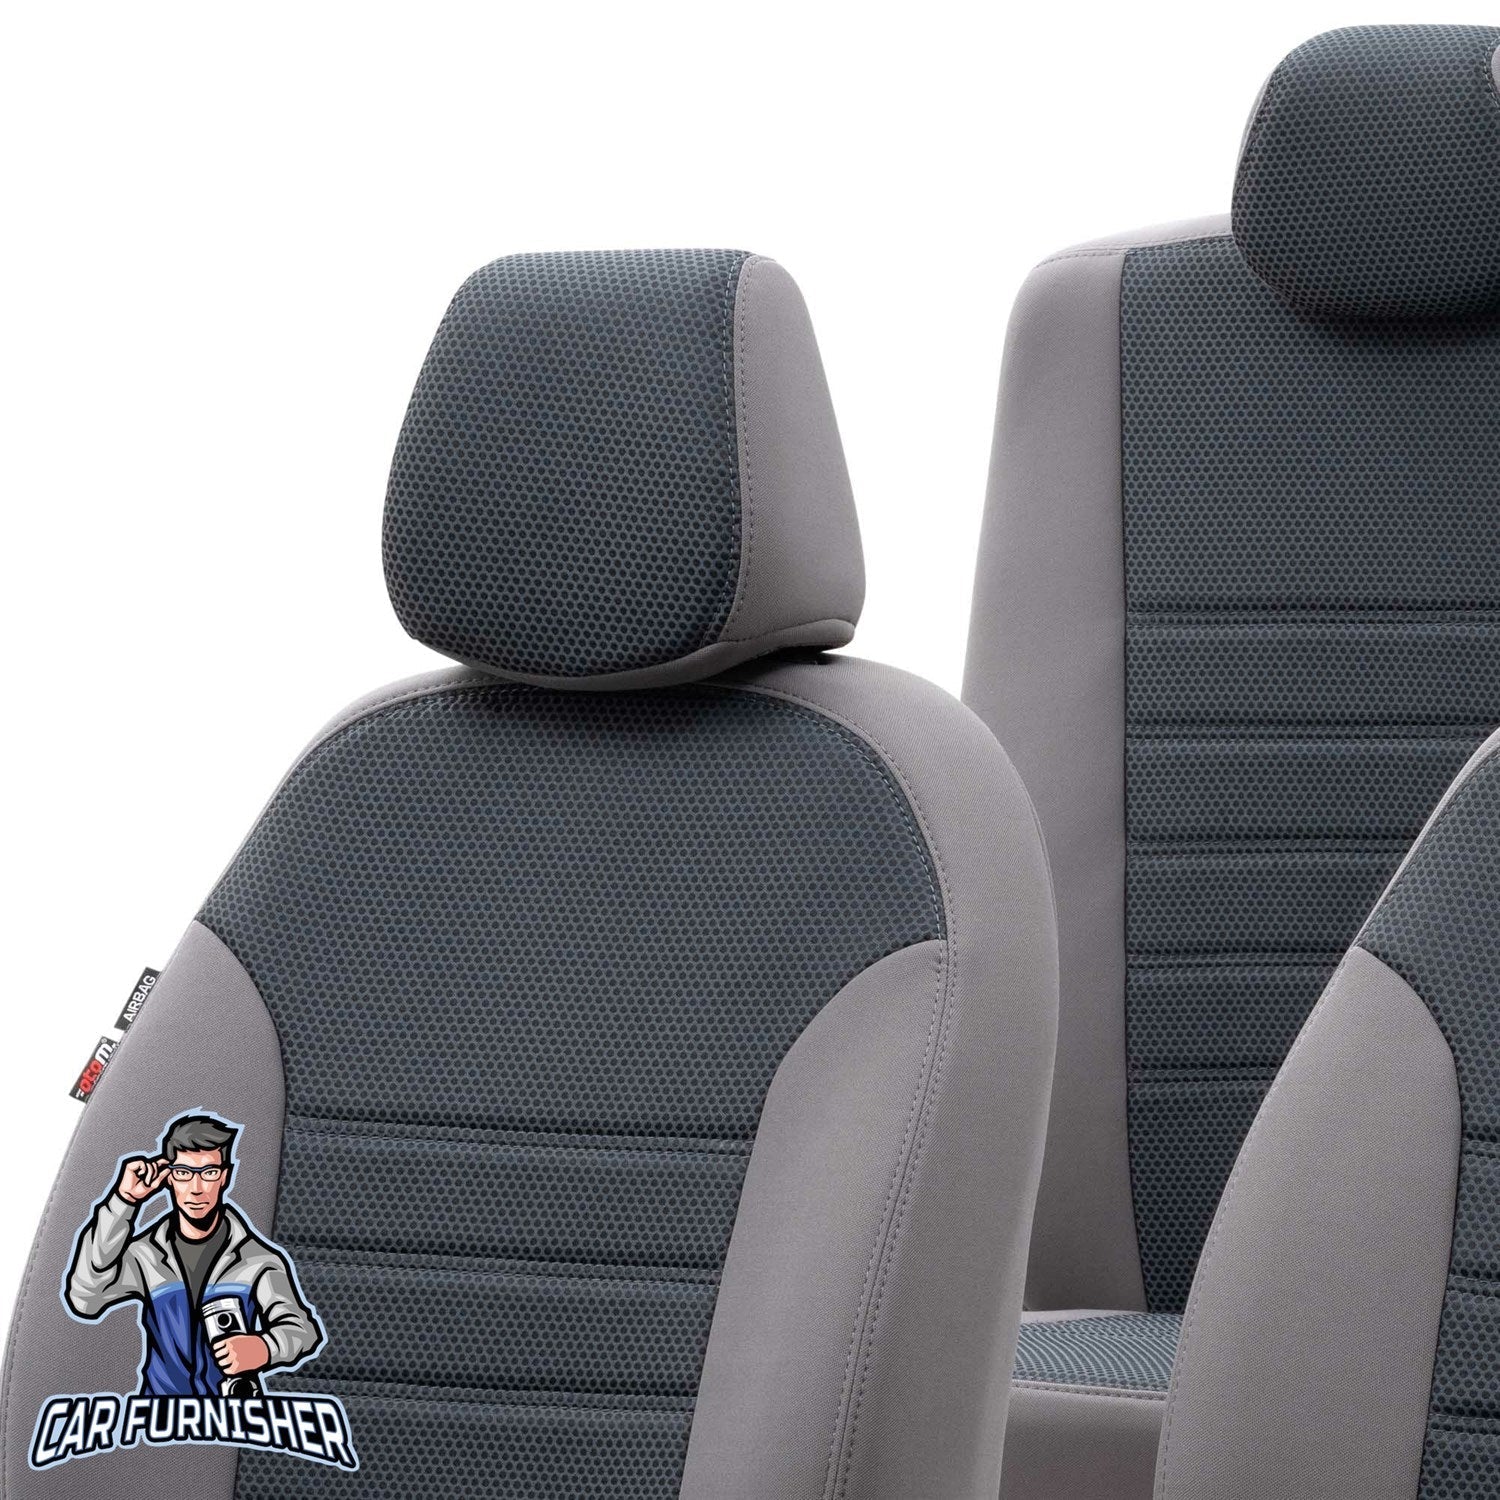 Bmw 5 Series Seat Cover Original Jacquard Design Smoked Jacquard Fabric